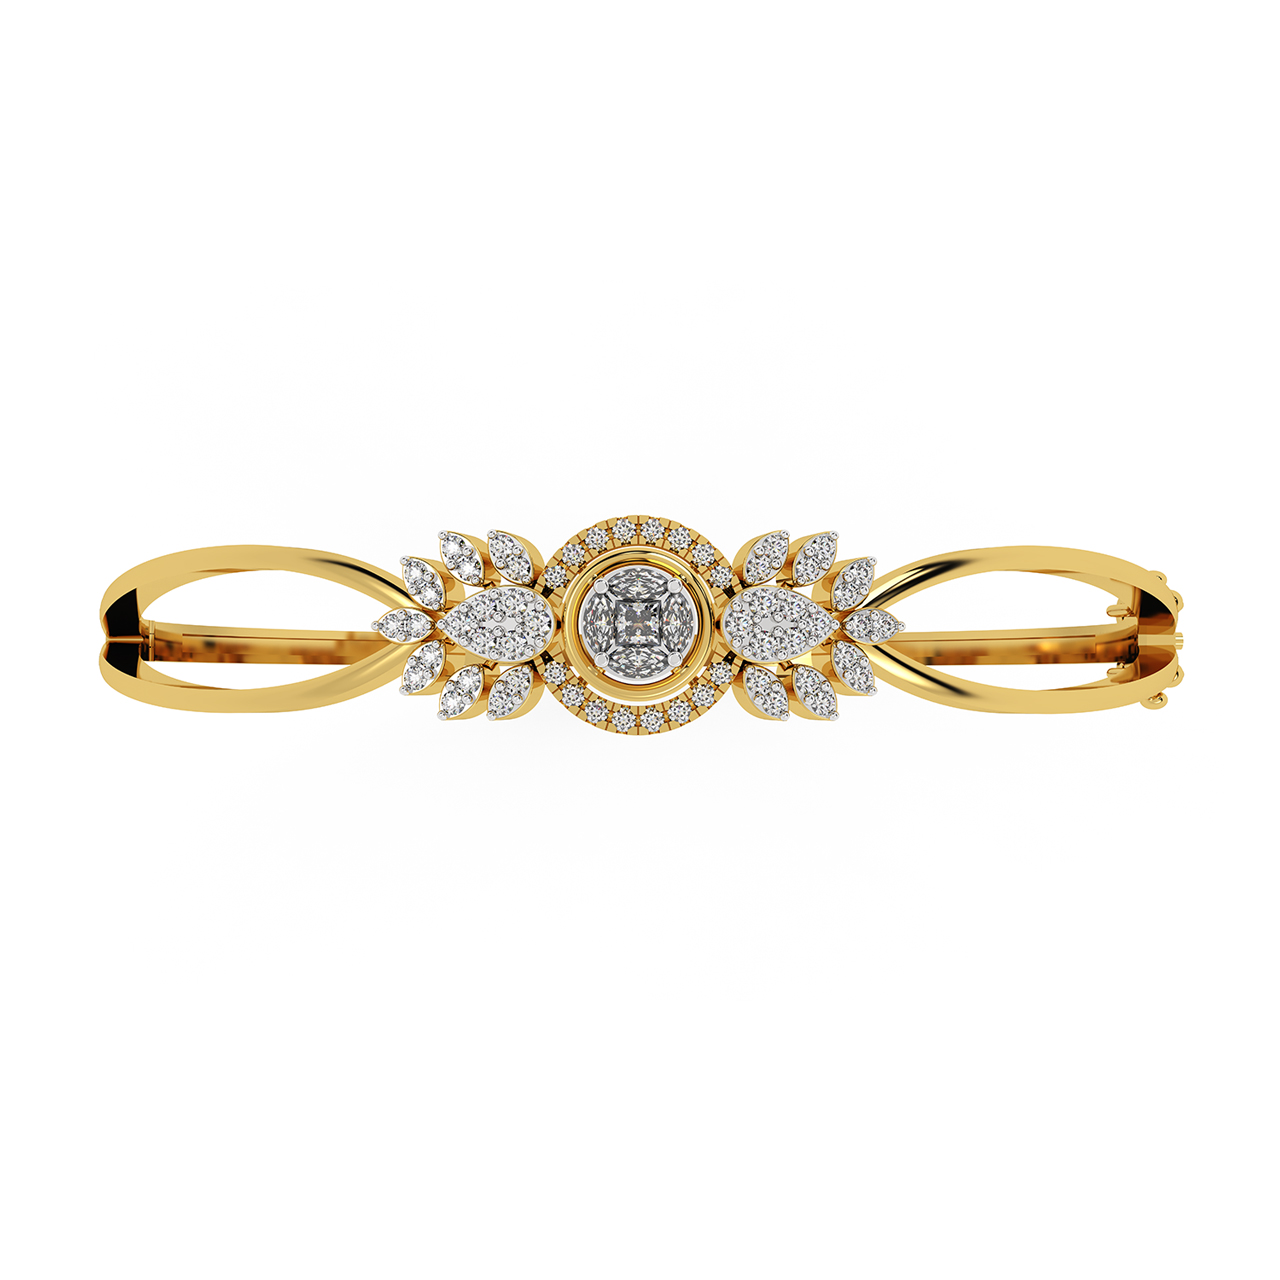 Buy PC Jeweller The Akiha 18KT Yellow Gold & Diamond Bracelet at Amazon.in